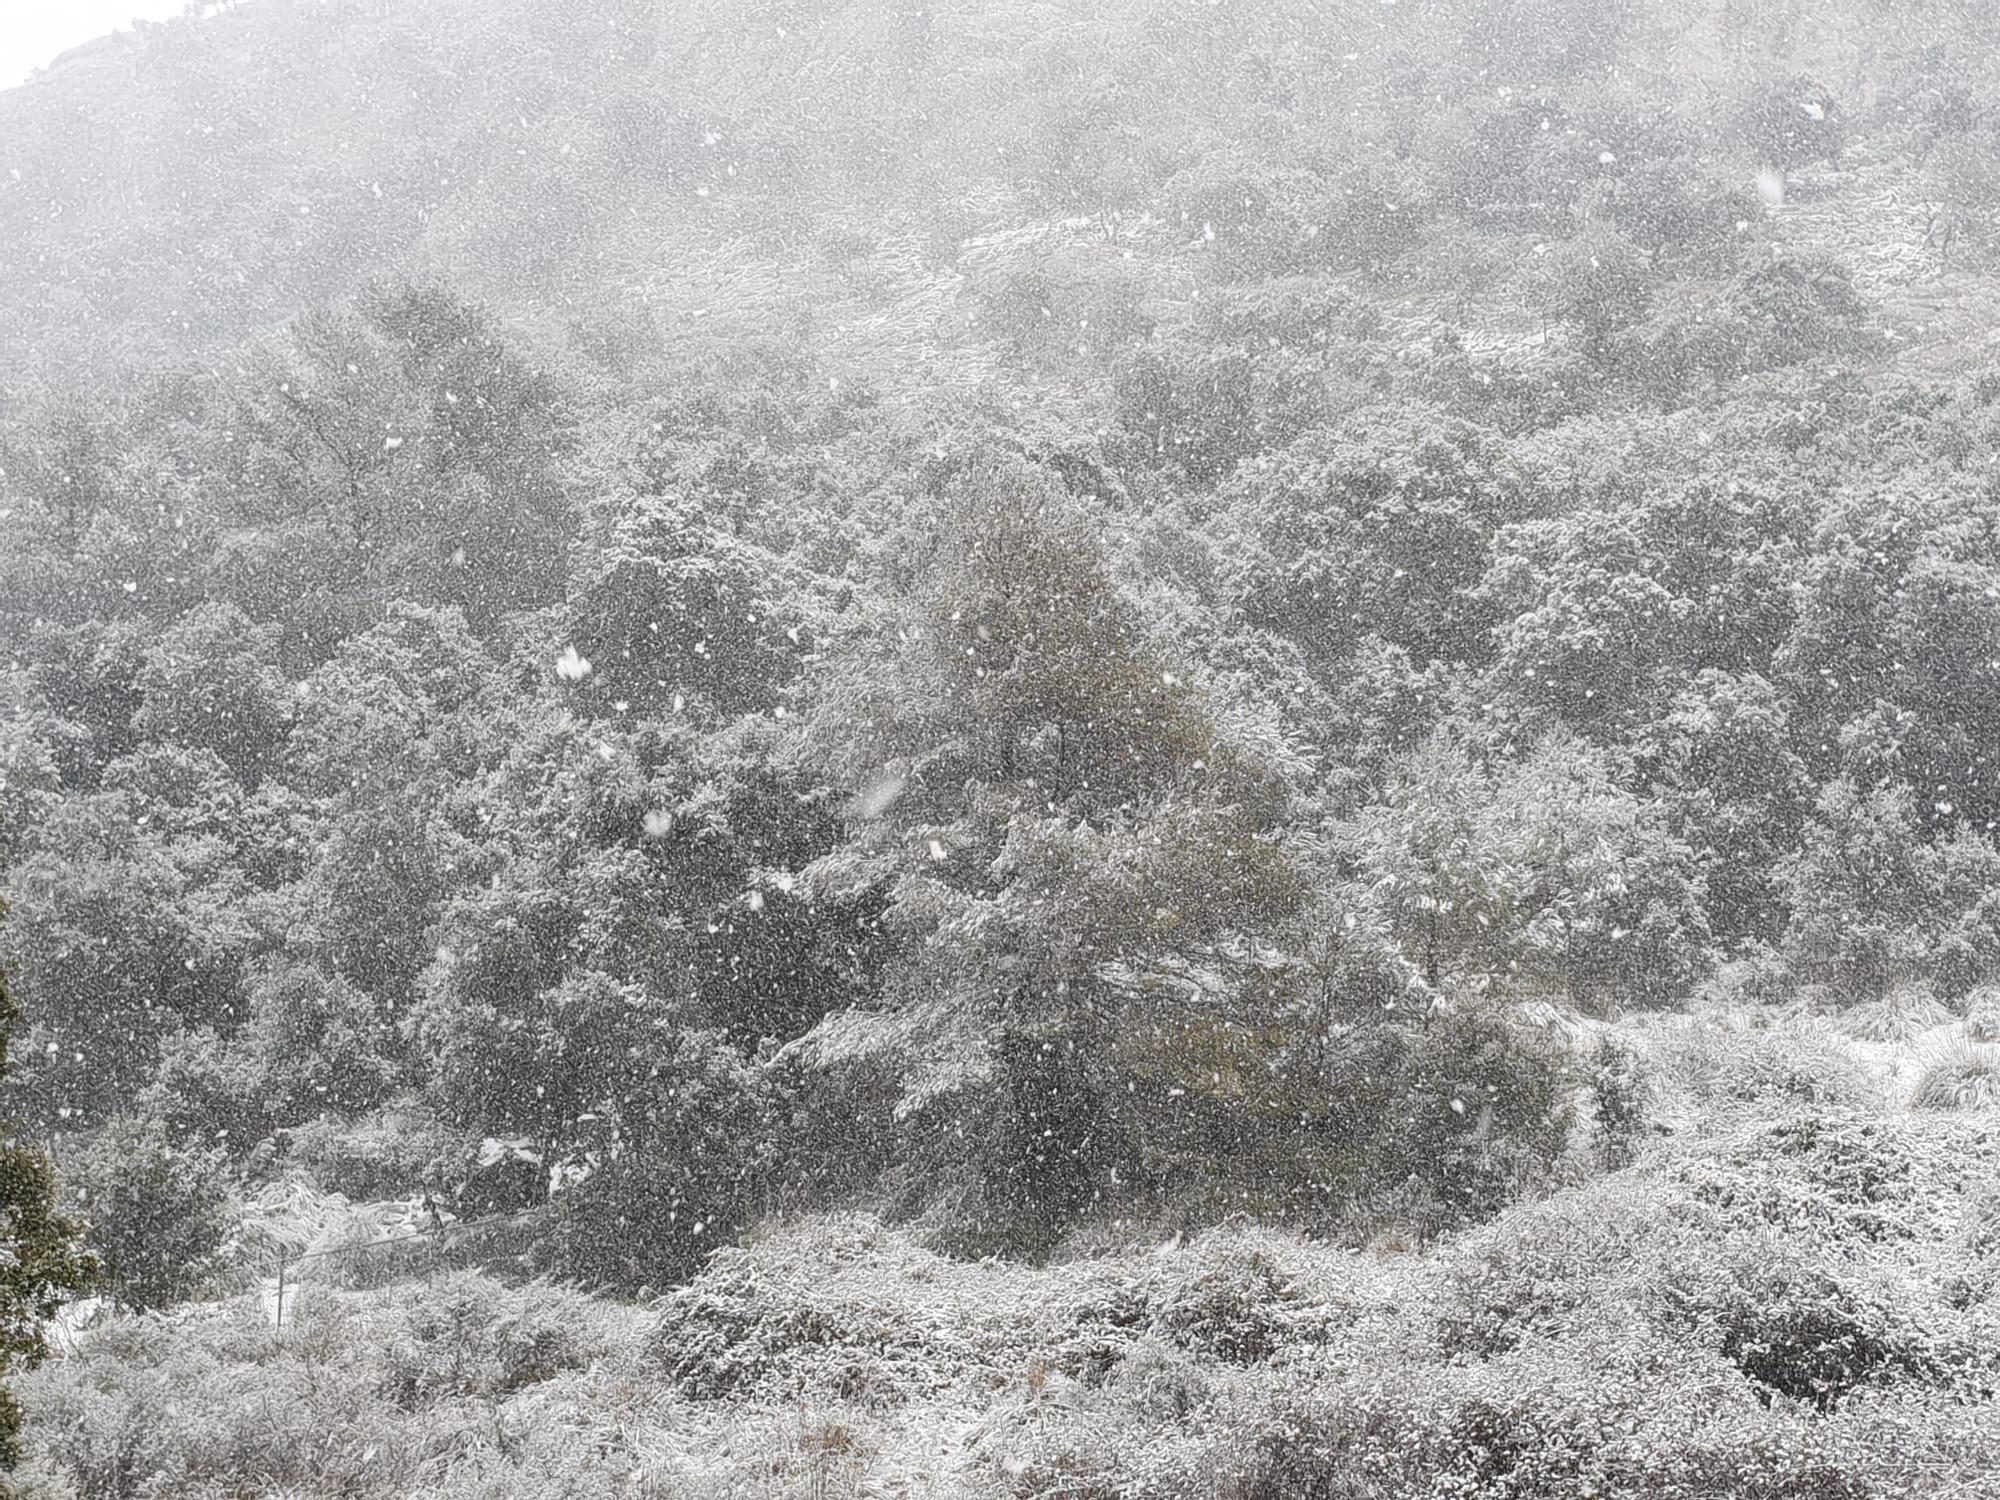 La nieve cae en la Serra